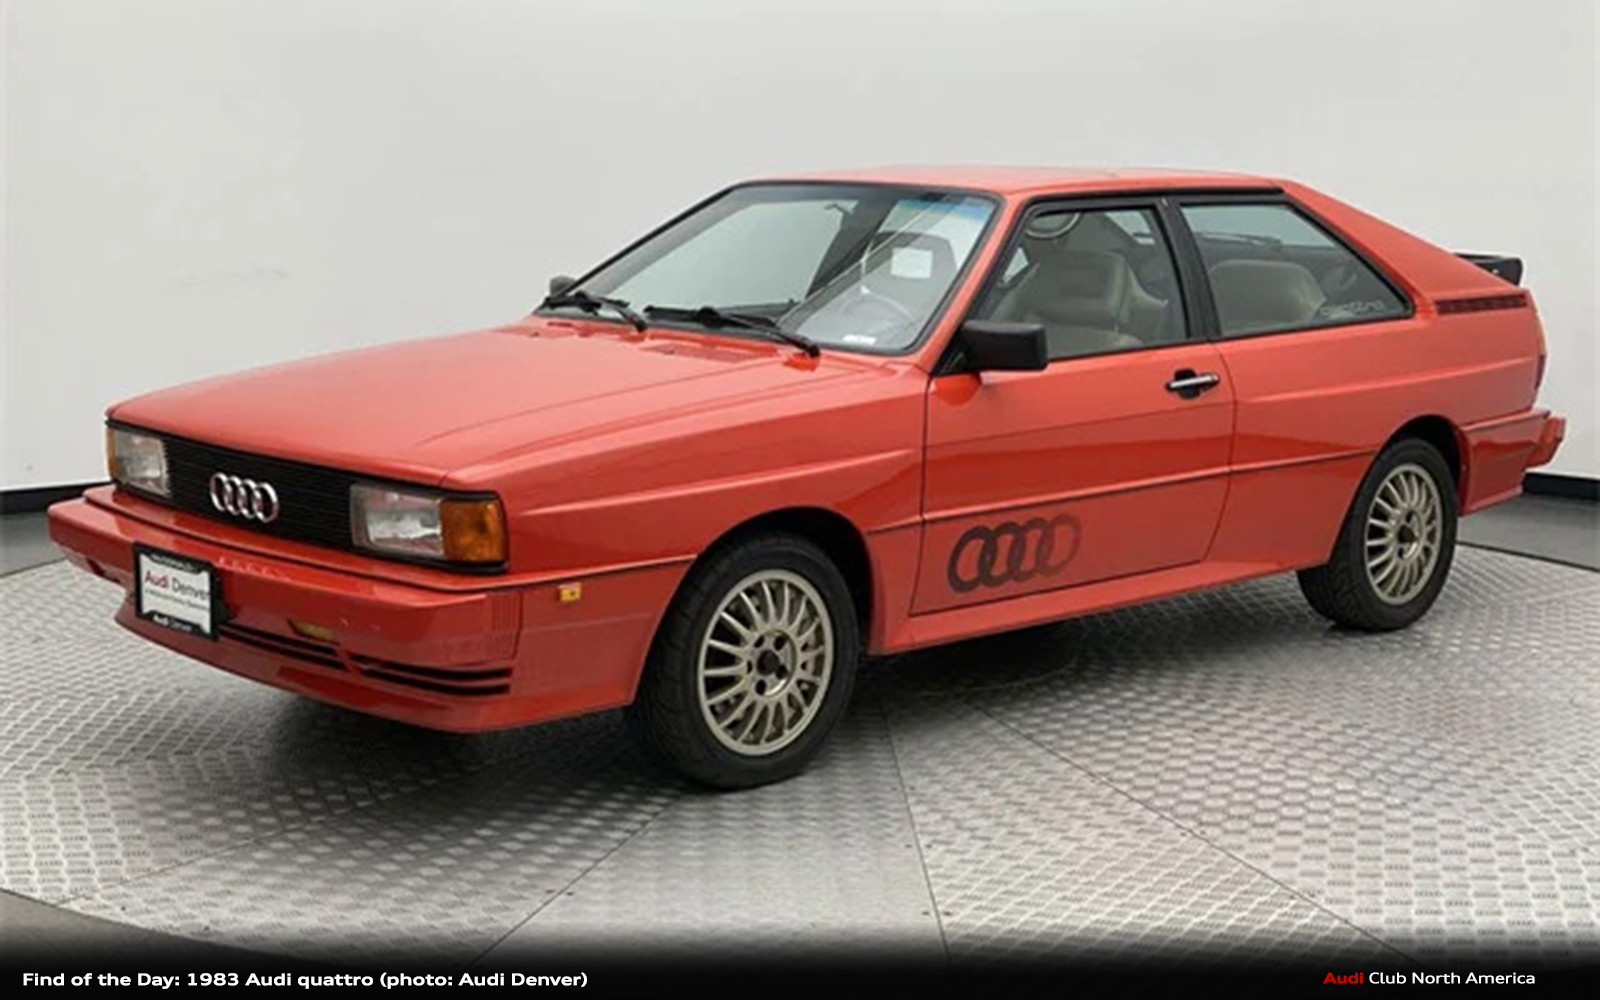 Find of the Day: 1983 Audi quattro - Audi Club North America